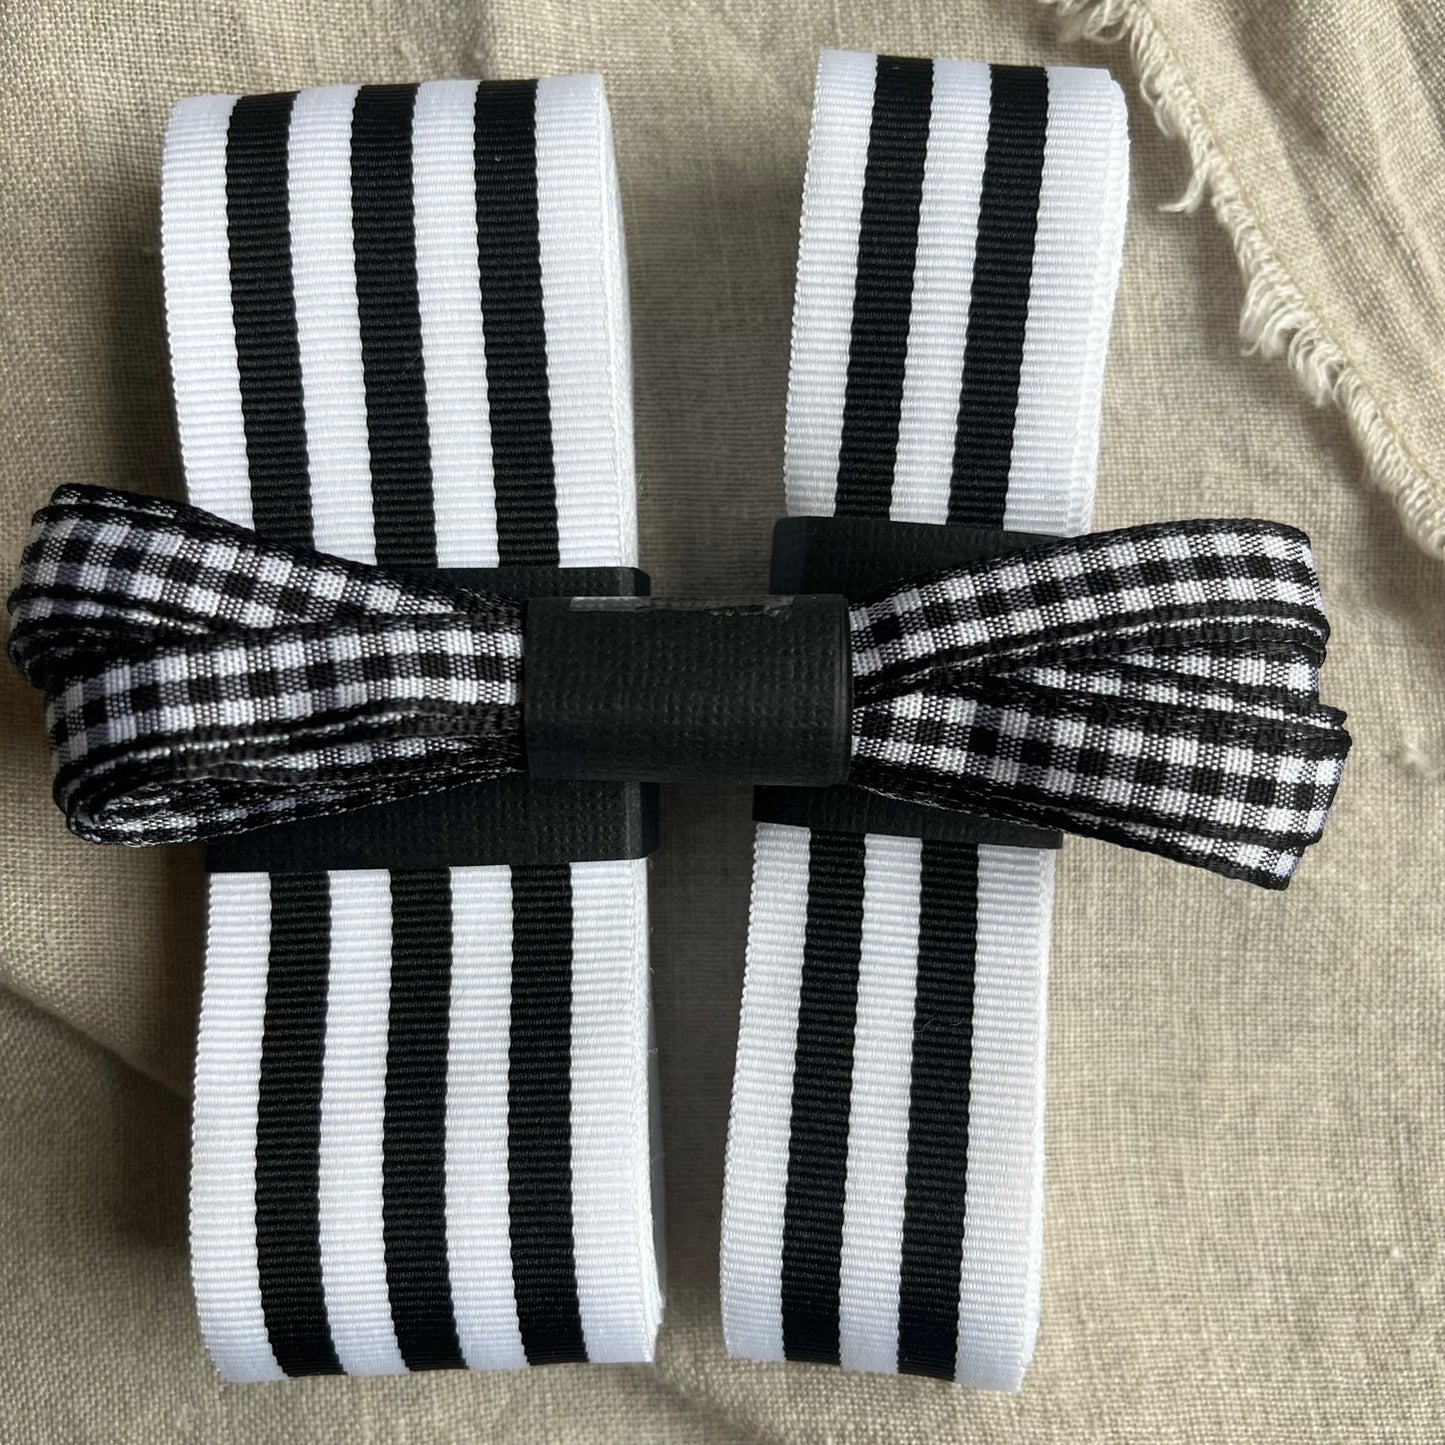 Black and White Striped Ribbon